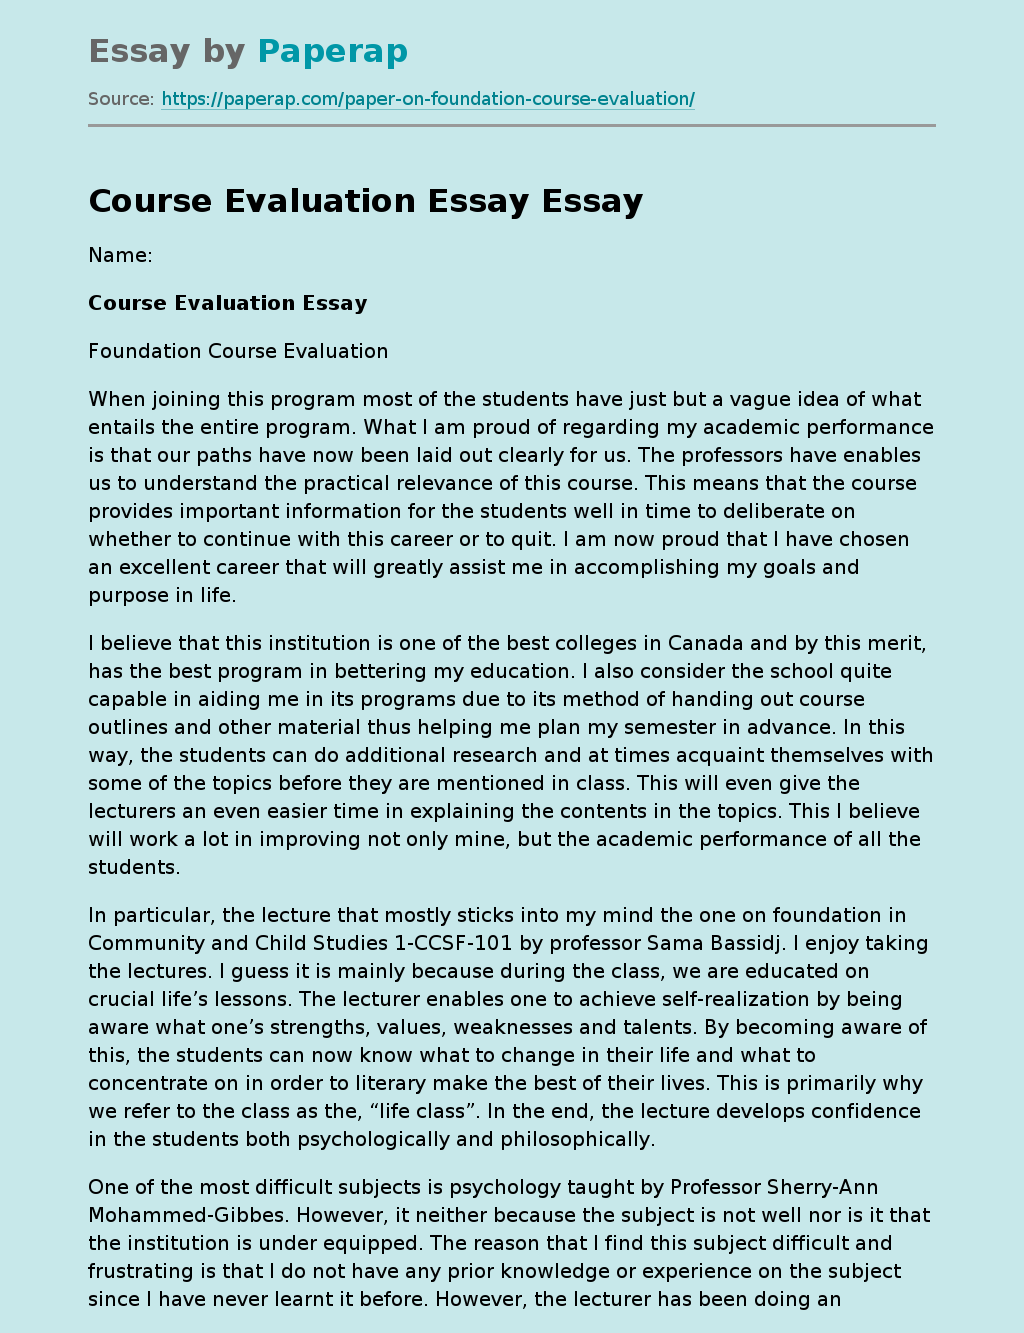 Course Evaluation Essay